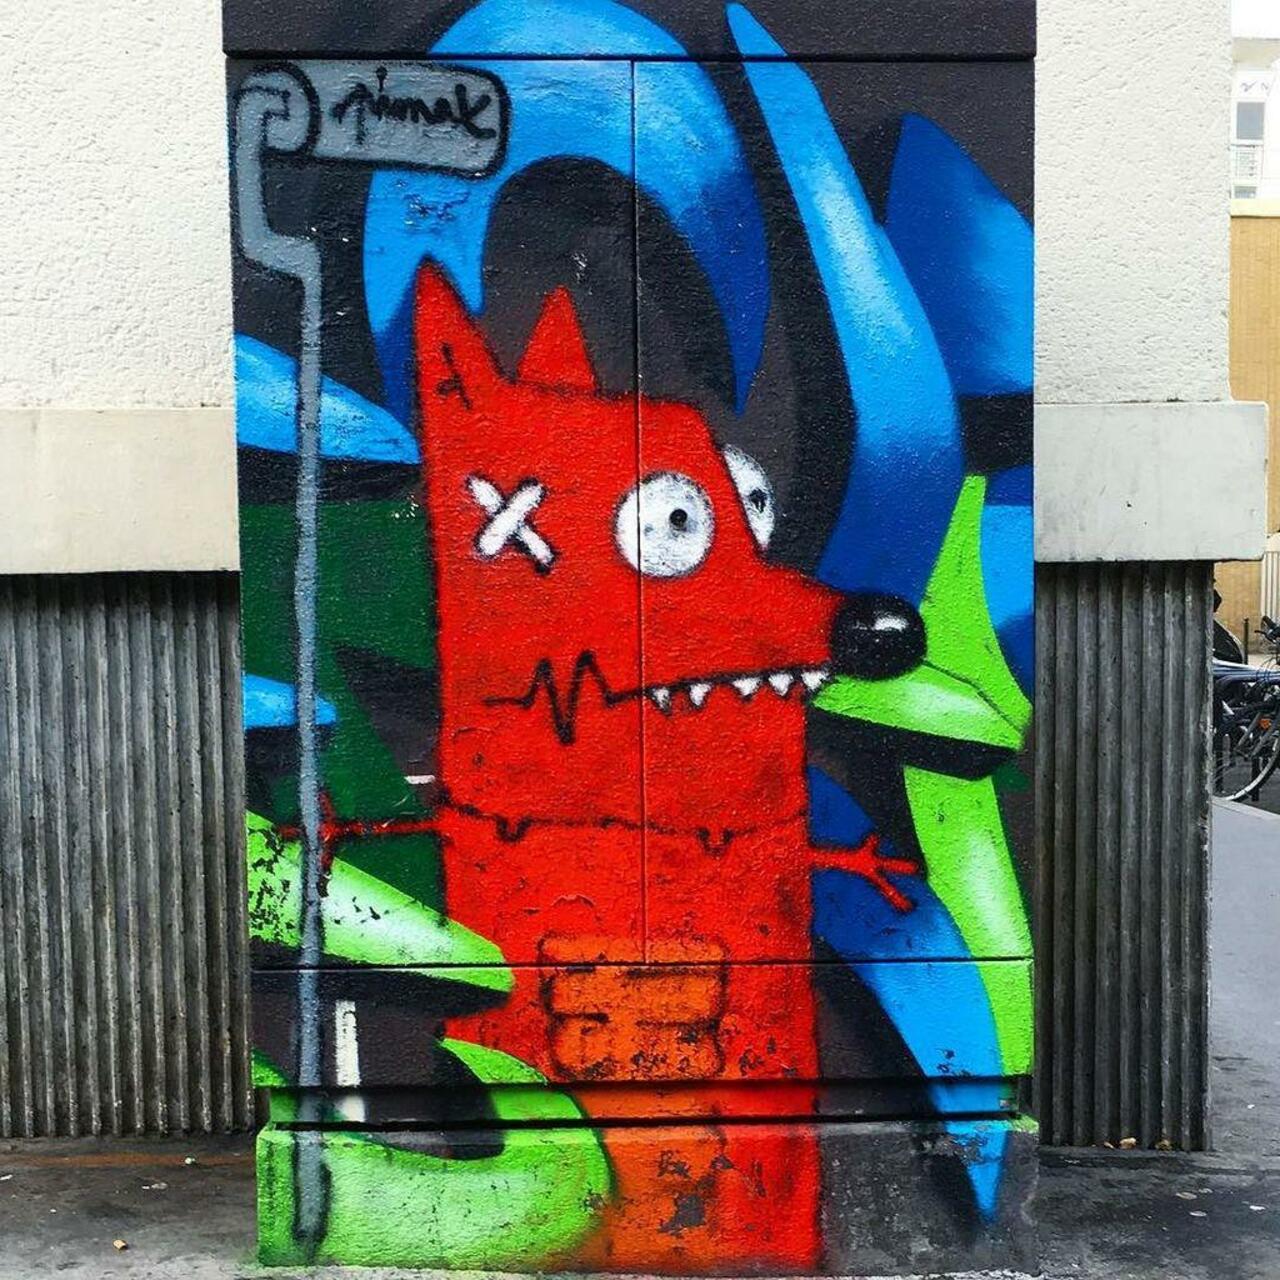 Work by @pimaxart in Paris #Art #ArtDeRue #ArtUrbain #UrbanArt #UrbanGraffiti #Graffiti #UrbanStreetArt #StreetArt … http://t.co/mHM0CFFJJL